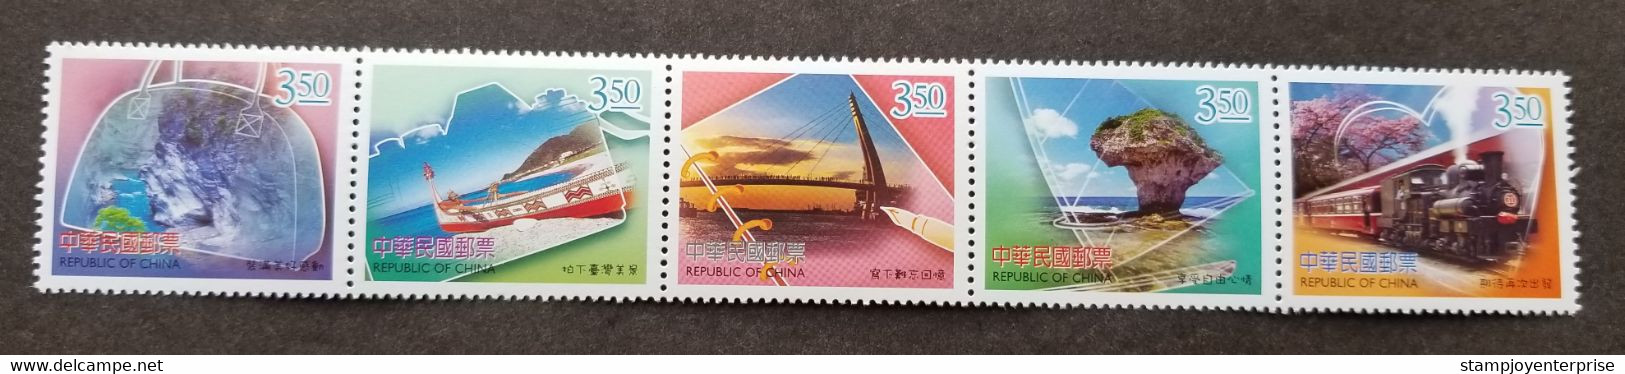 Taiwan Tourism Greeting 2006 Travel Bridge Beaches Train Ship Camera (stamp) MNH - Unused Stamps